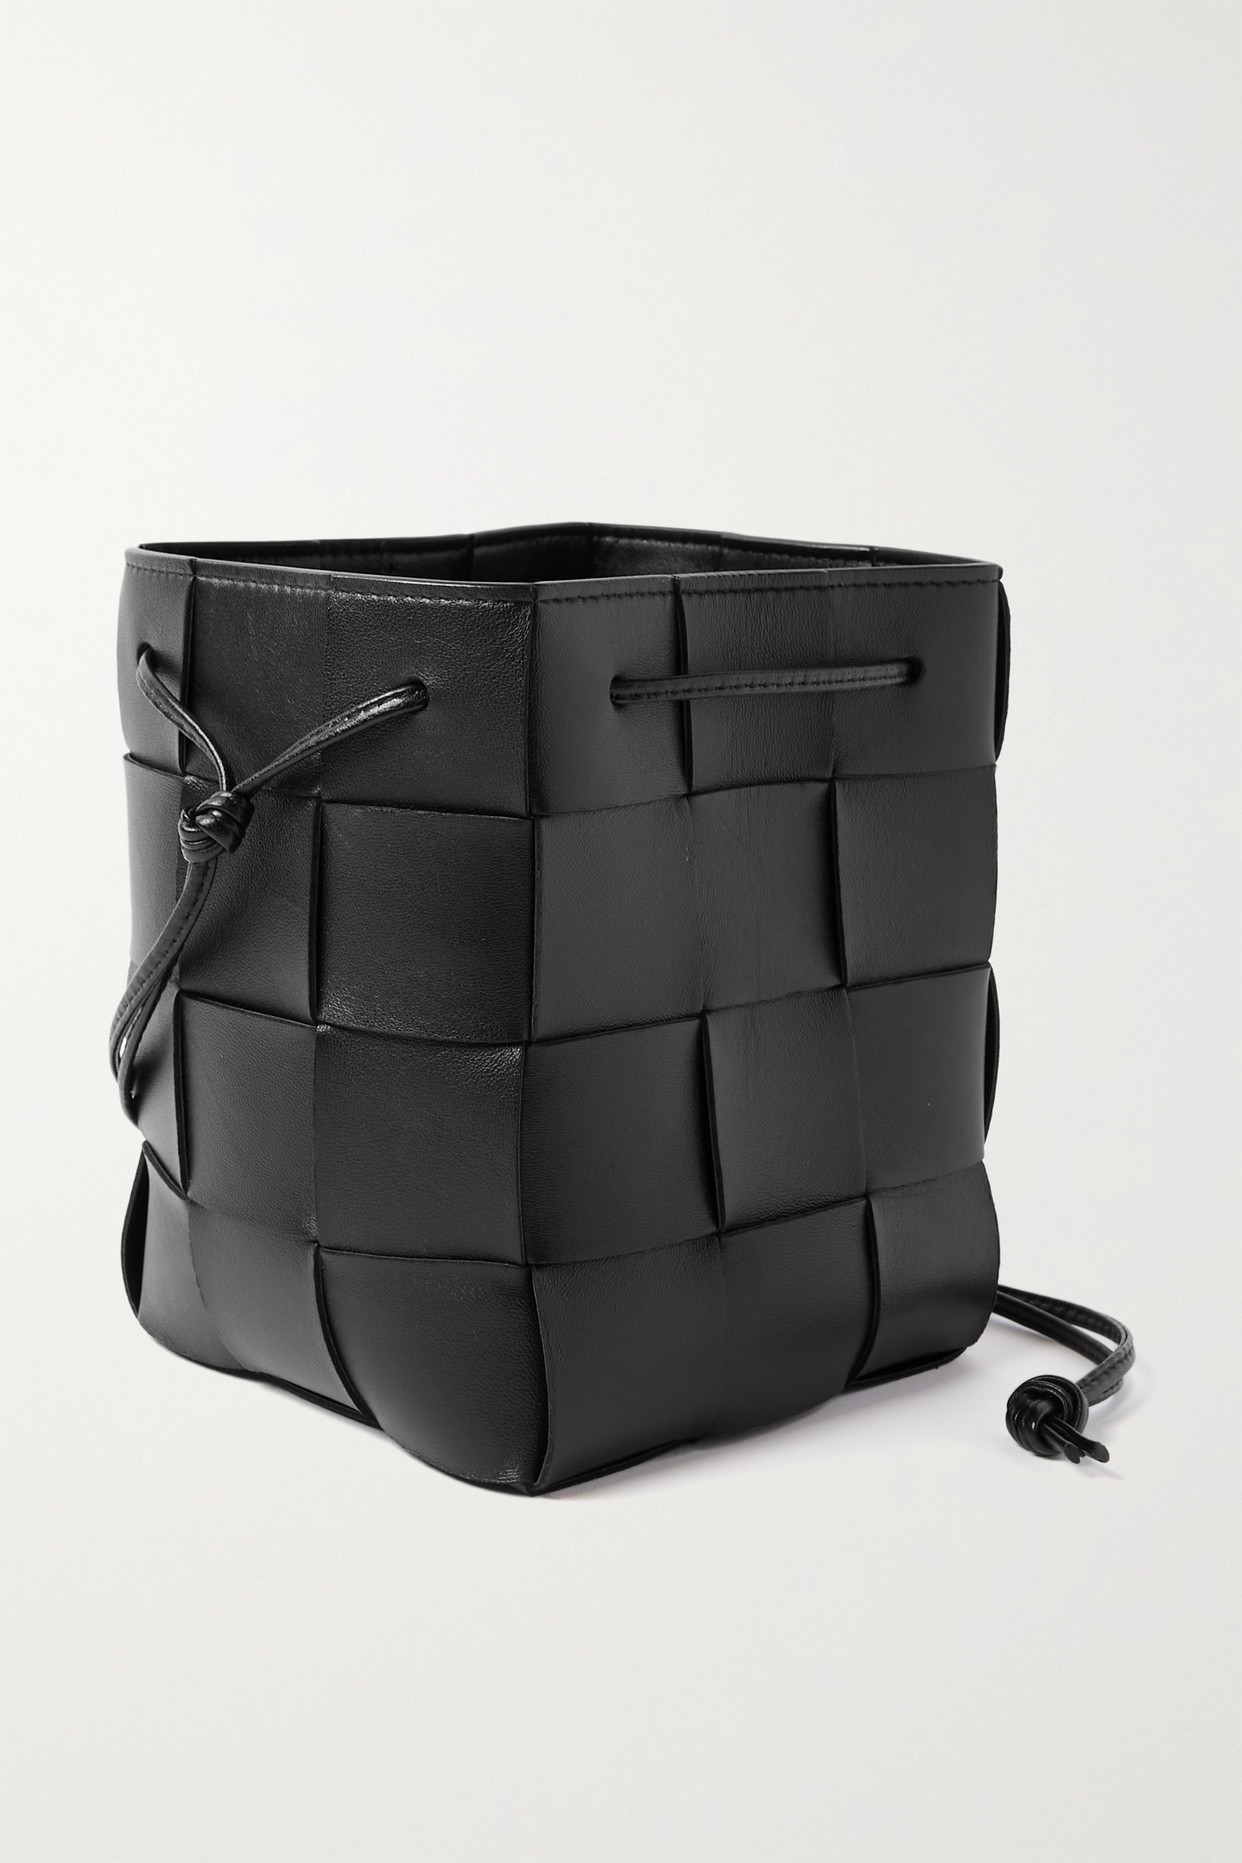 BOTTEGA VENETA Cassette small intrecciato leather shoulder bag